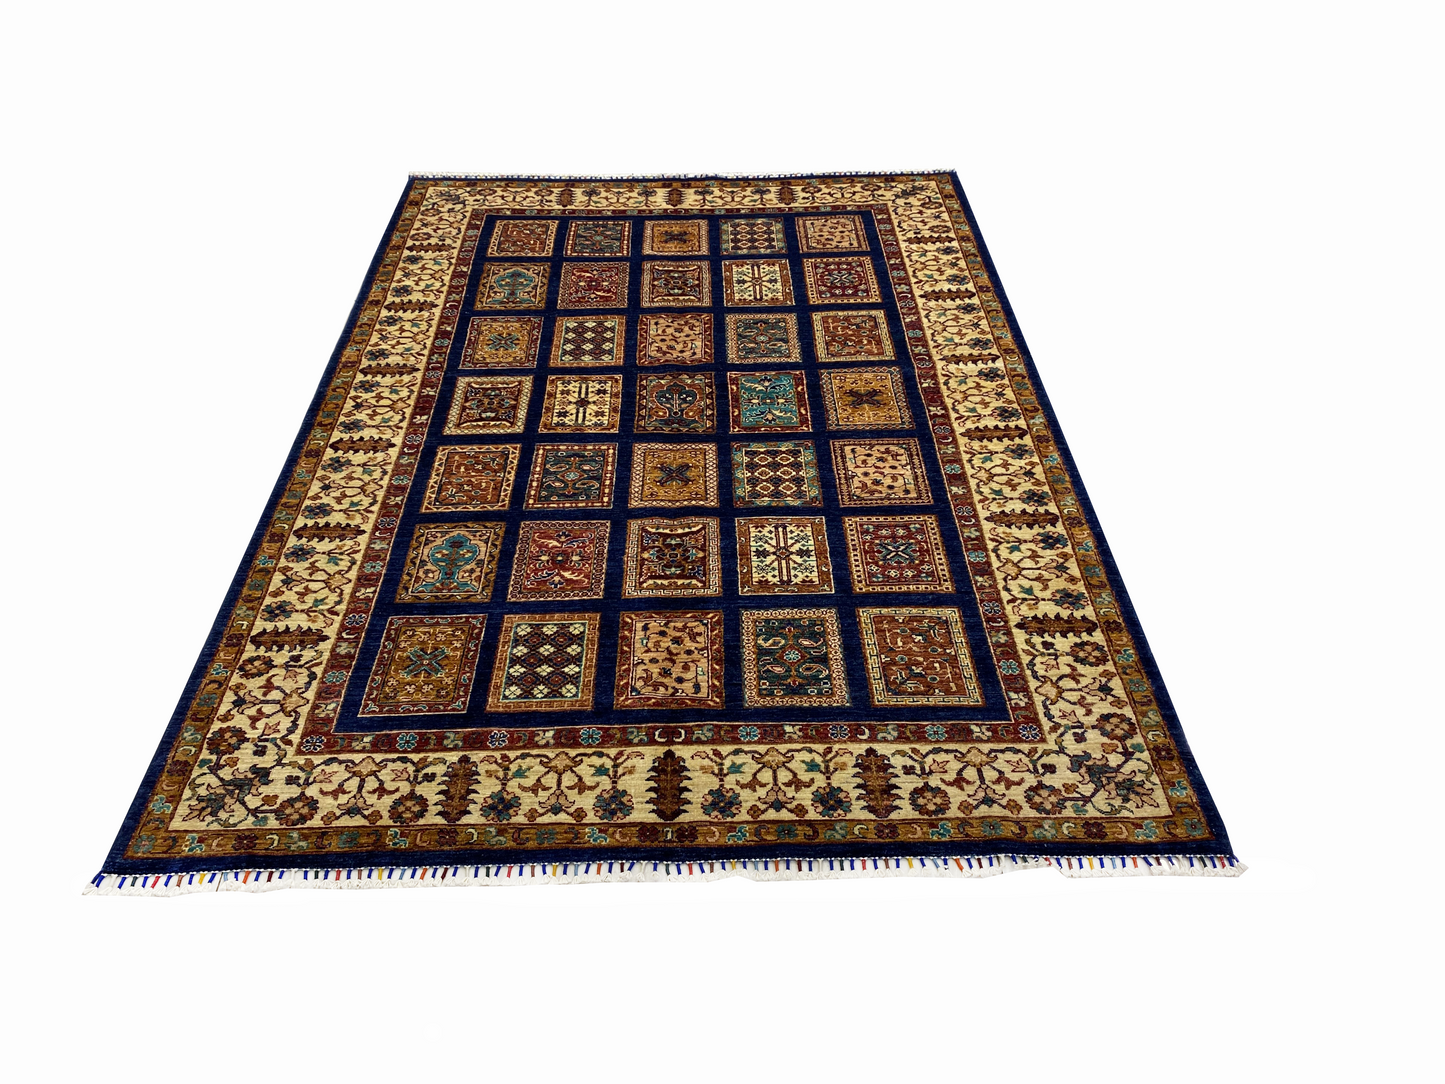 Şirvan Bicolor Carpet 250 x 175 cm